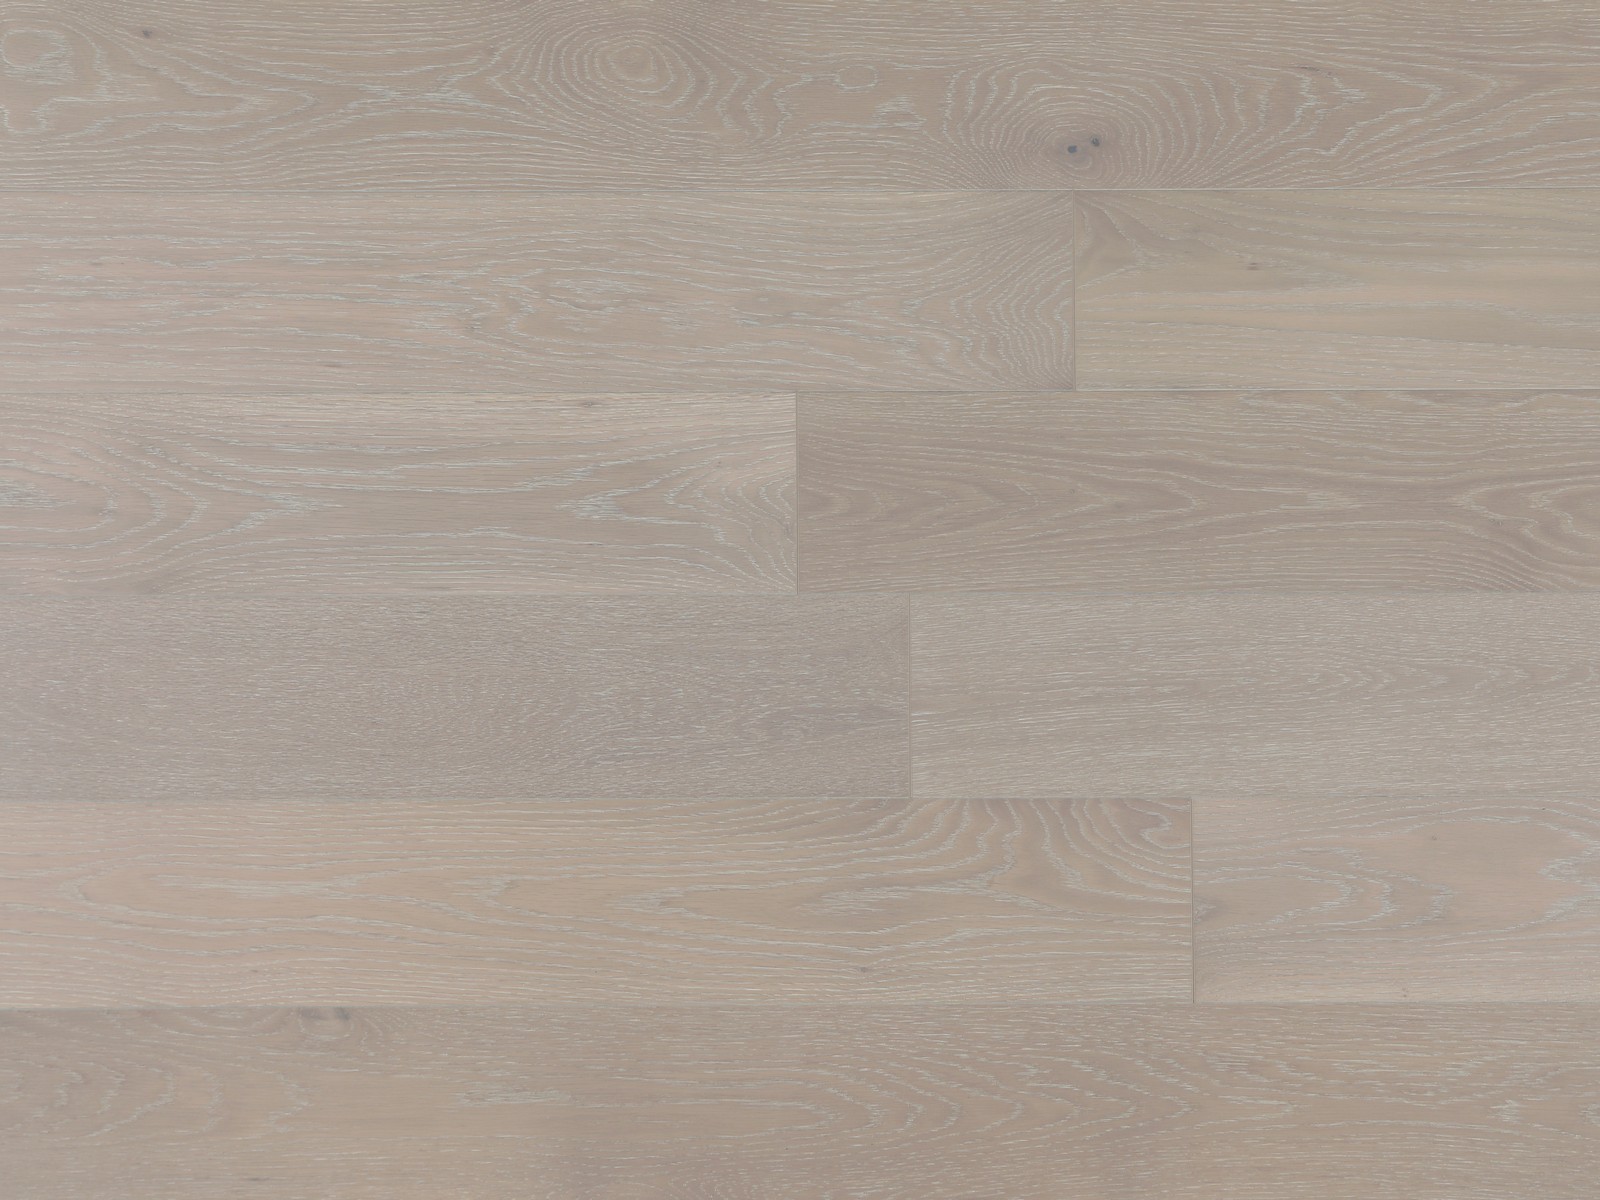 Ivory White Natural Hardwood Flooring Click Engineered Oak Light Wooden Floor 